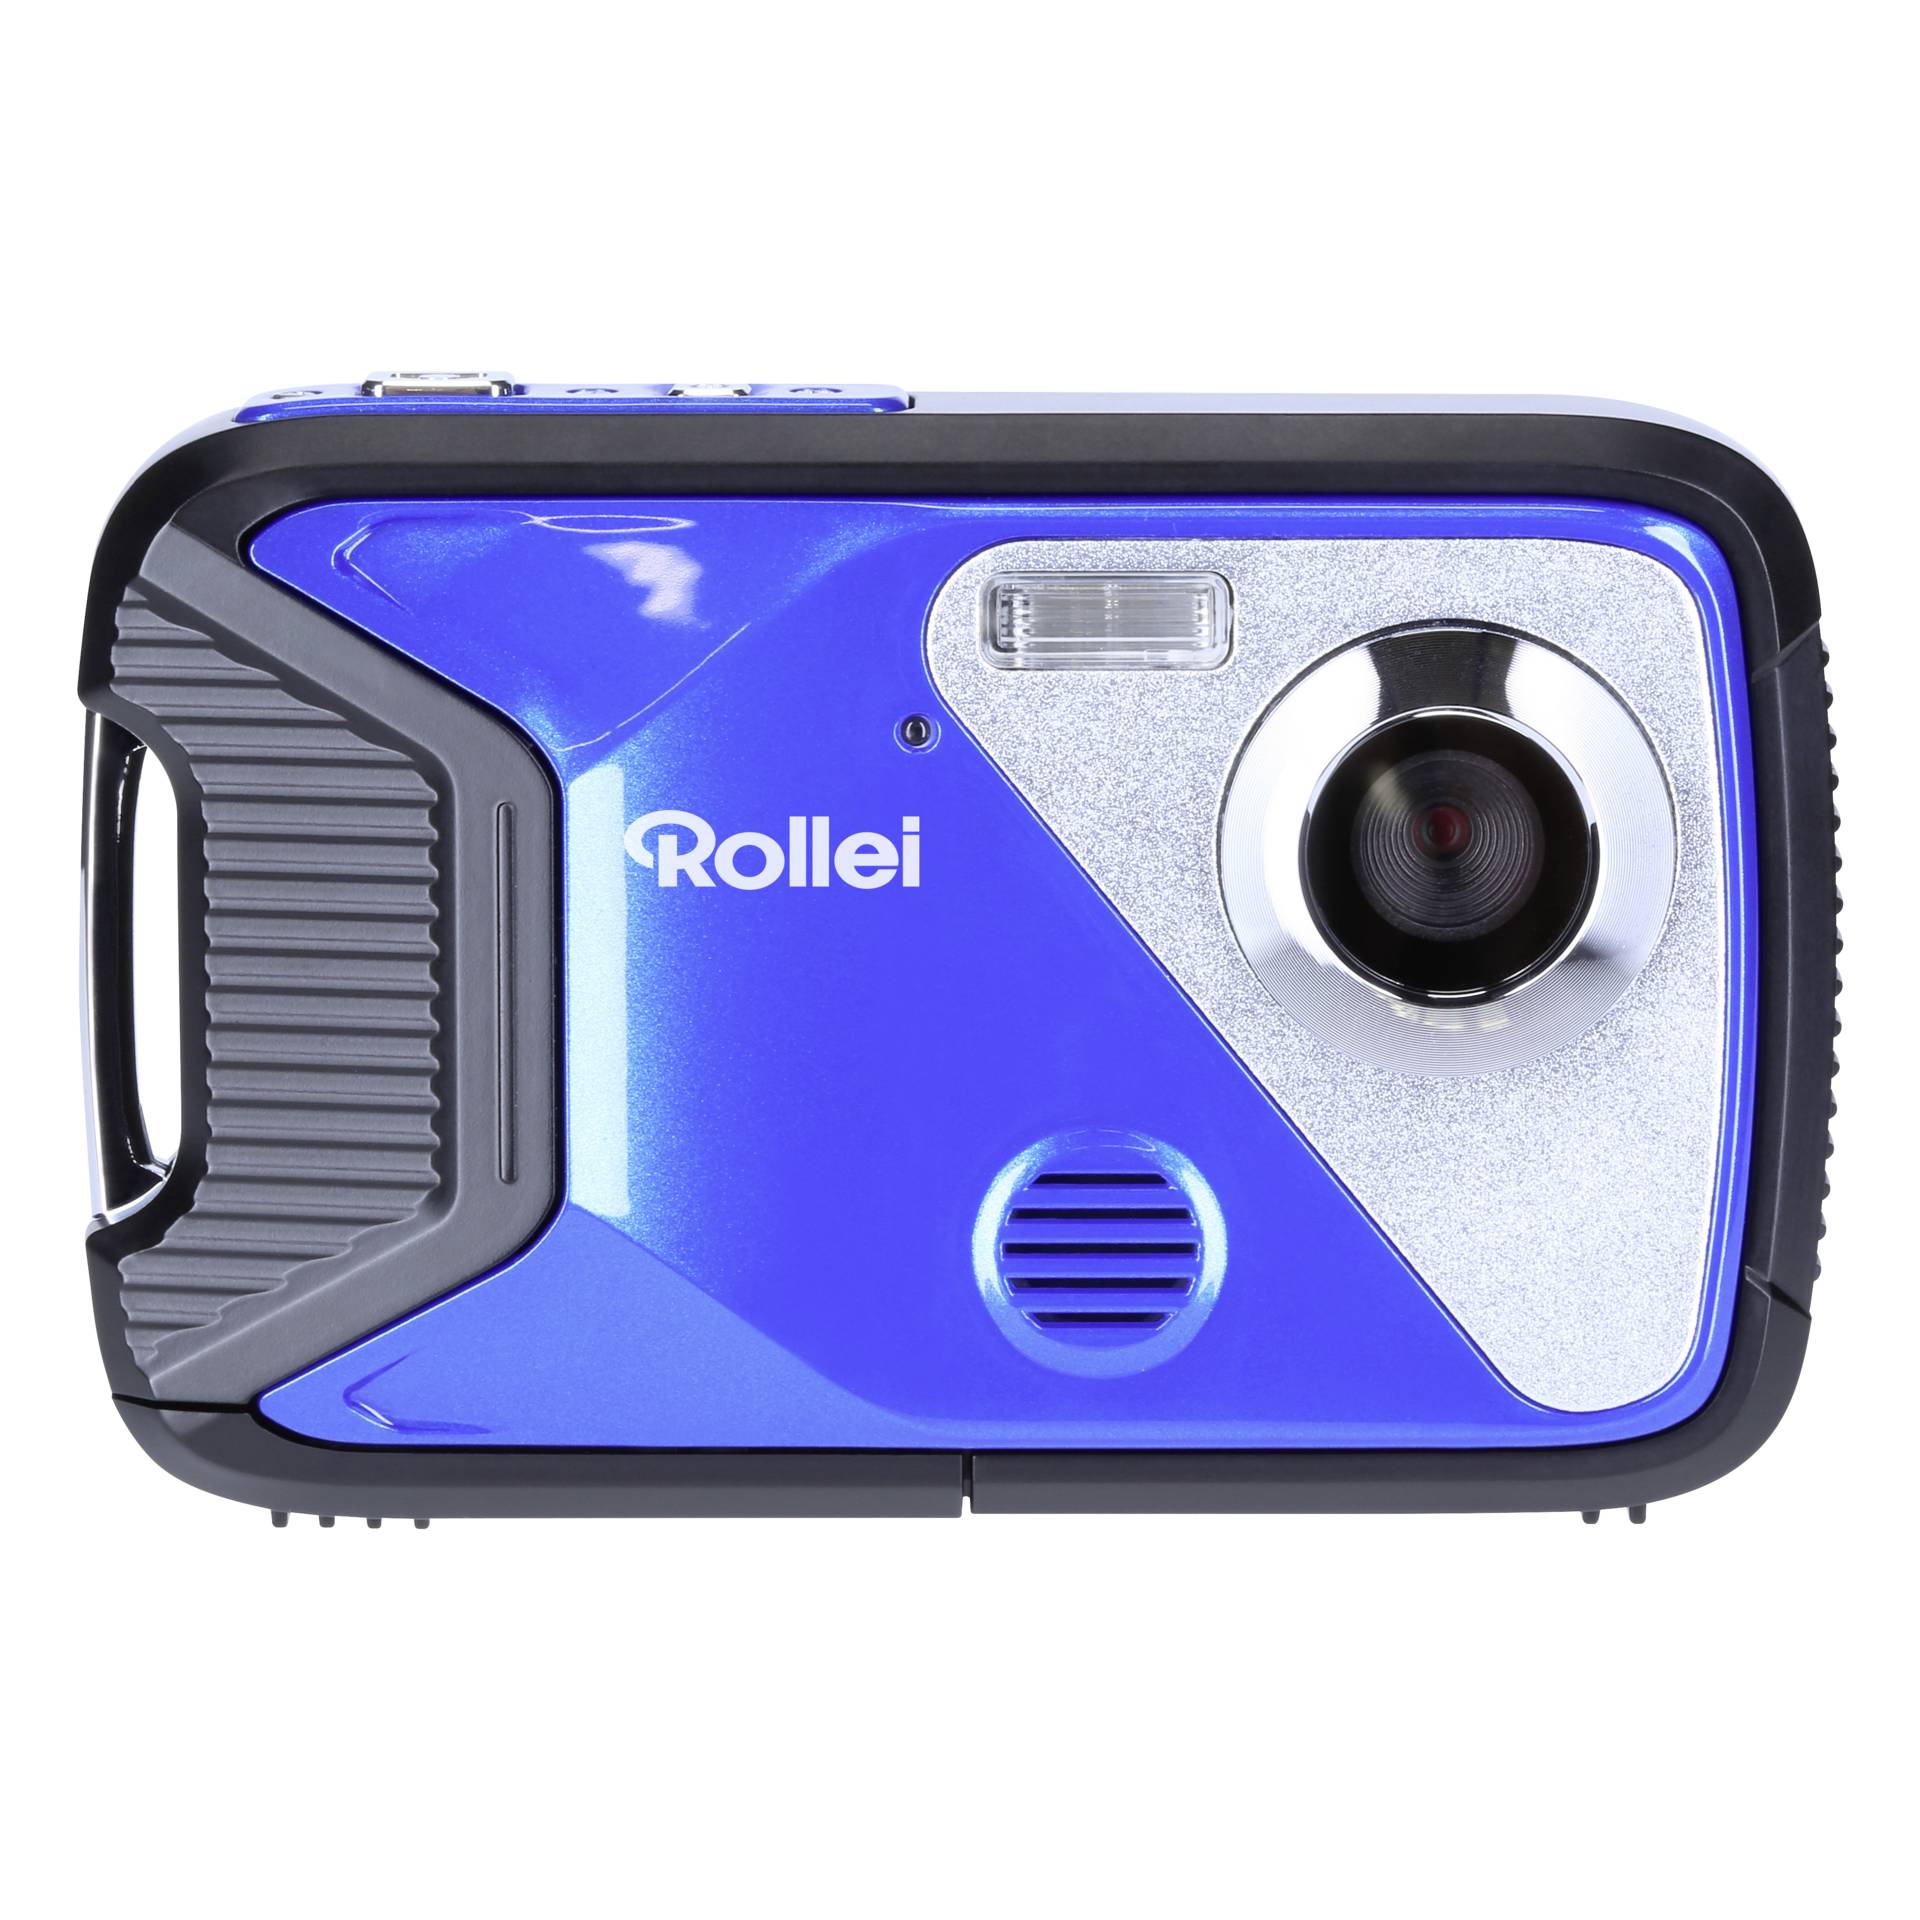 Rollei Sportsline 60 Plus Kompaktkamera 8 MP CMOS 5616 x 3744 Pixel Schwarz, Blau, Weiß